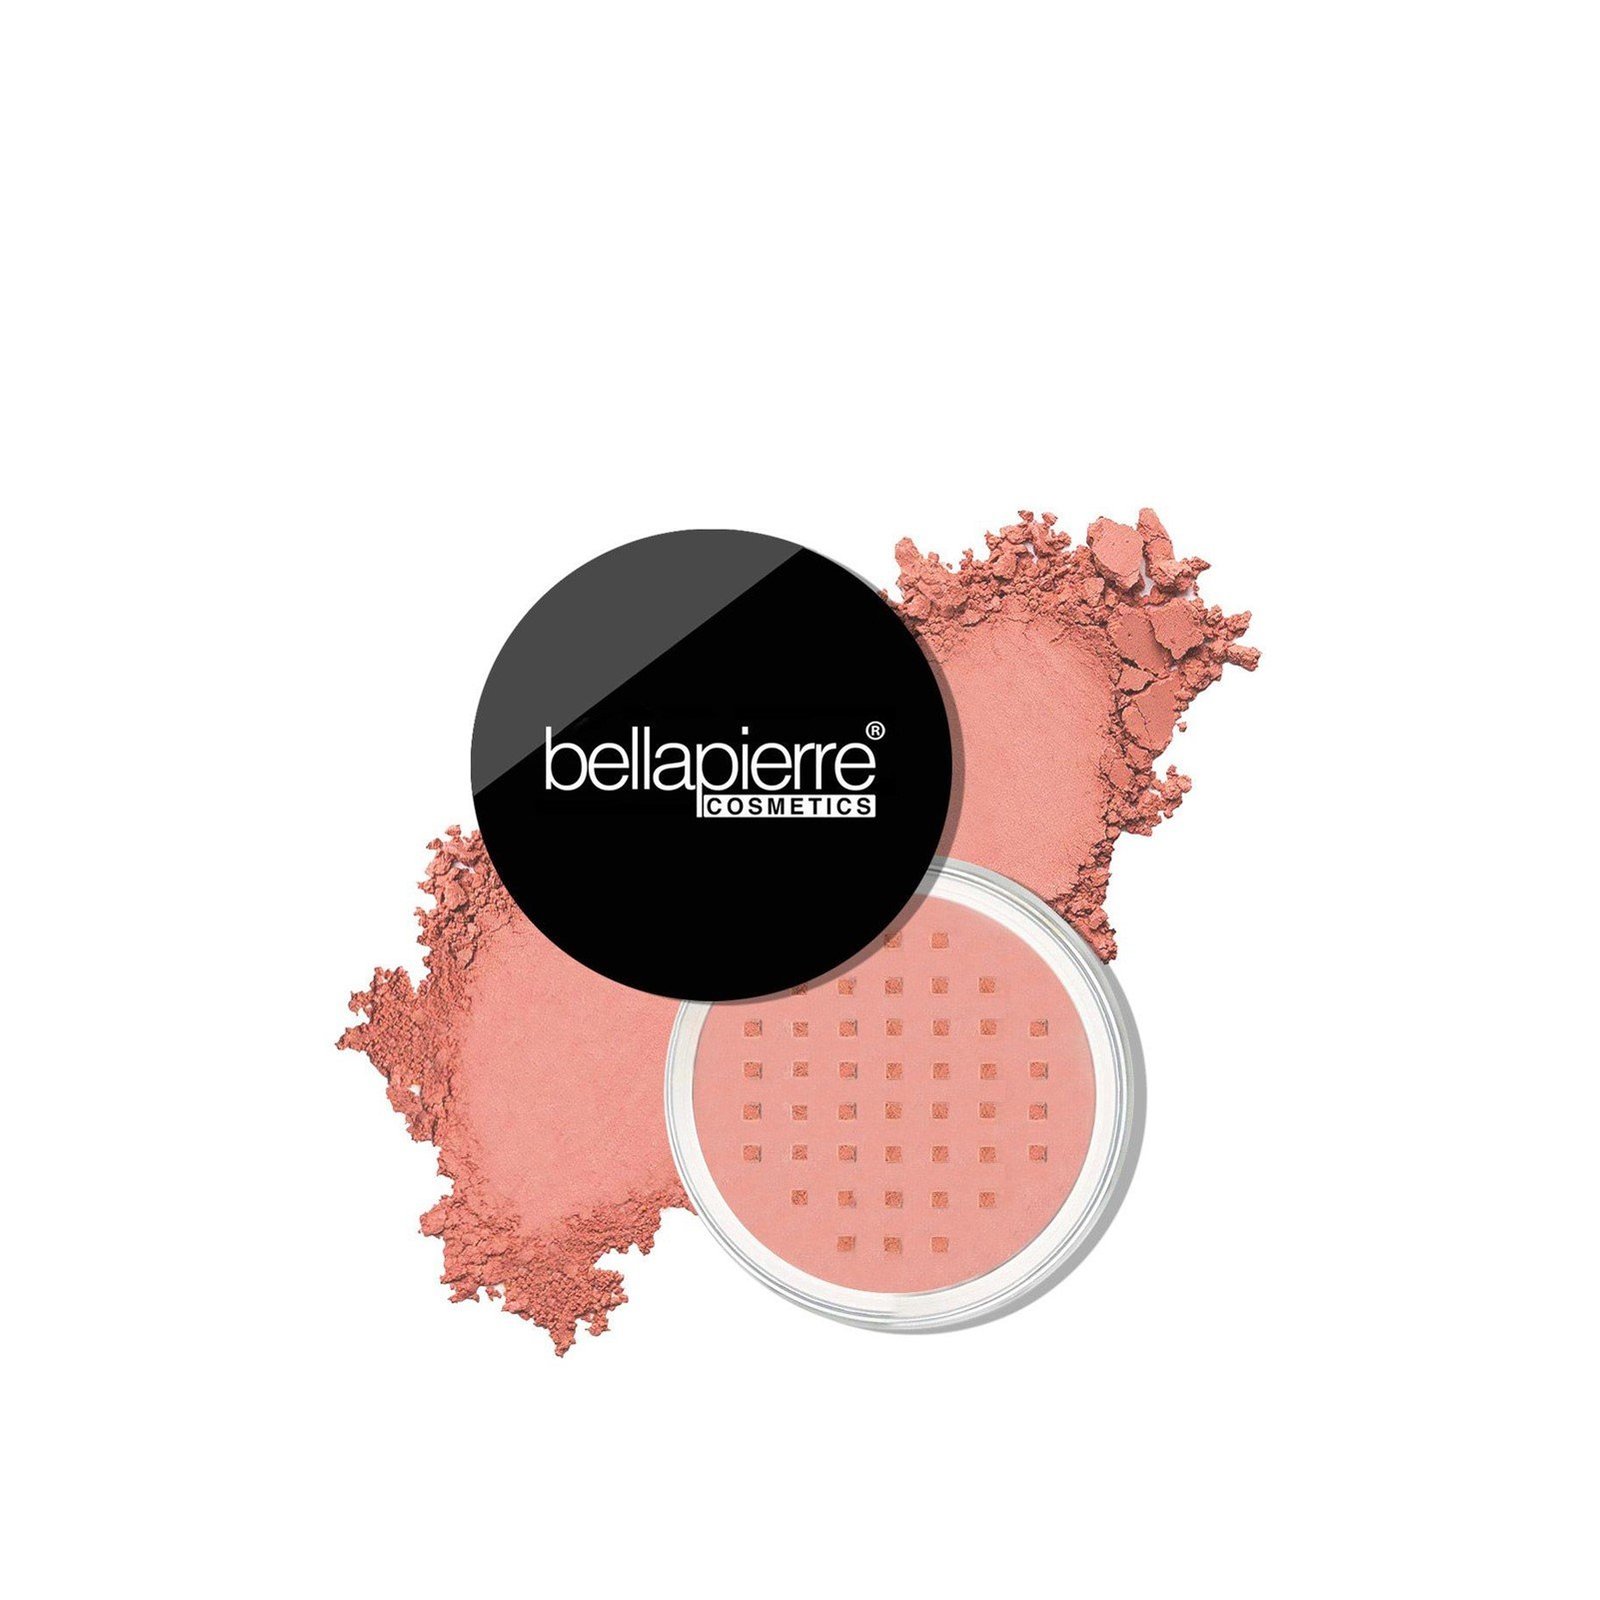 Bellapierre Cosmetics Mineral Blush Desert Rose 4g (0.13oz)